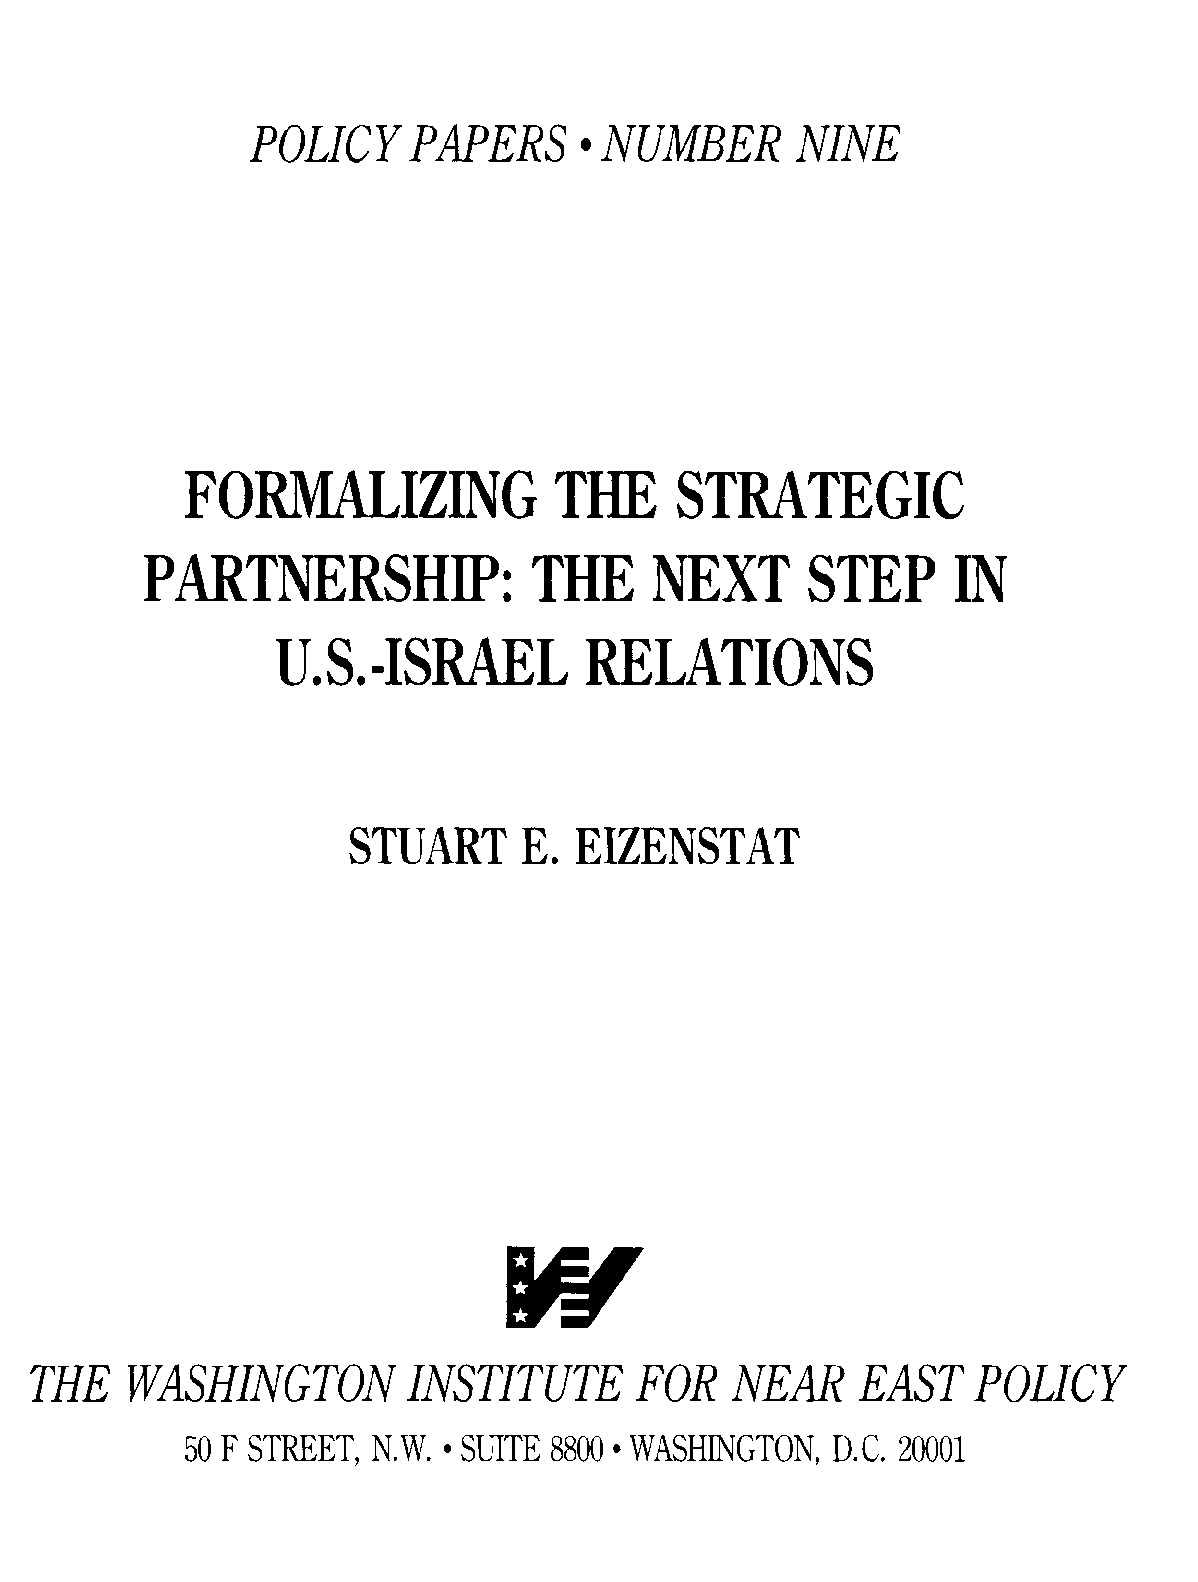 PP_9_FormalizingtheStrategicPartnership.pdf